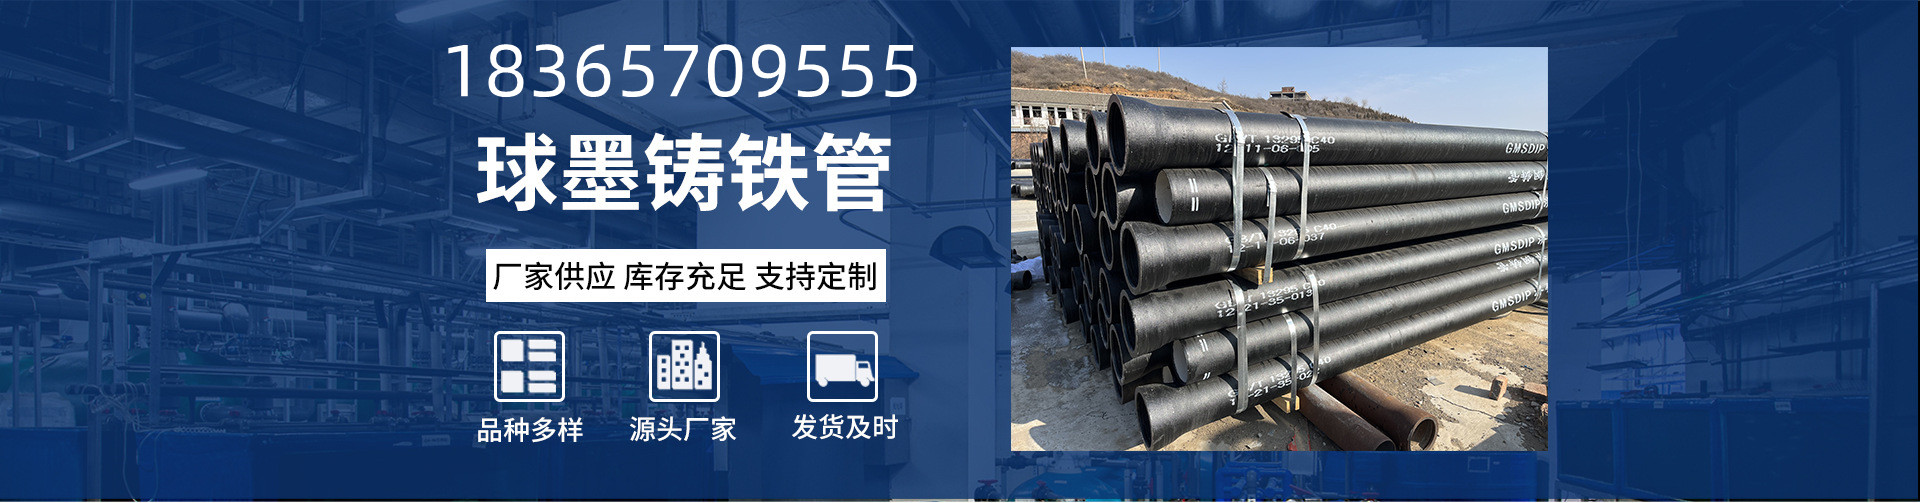 DN100柔性铸铁排污管、广安本地DN100柔性铸铁排污管、广安、广安DN100柔性铸铁排污管